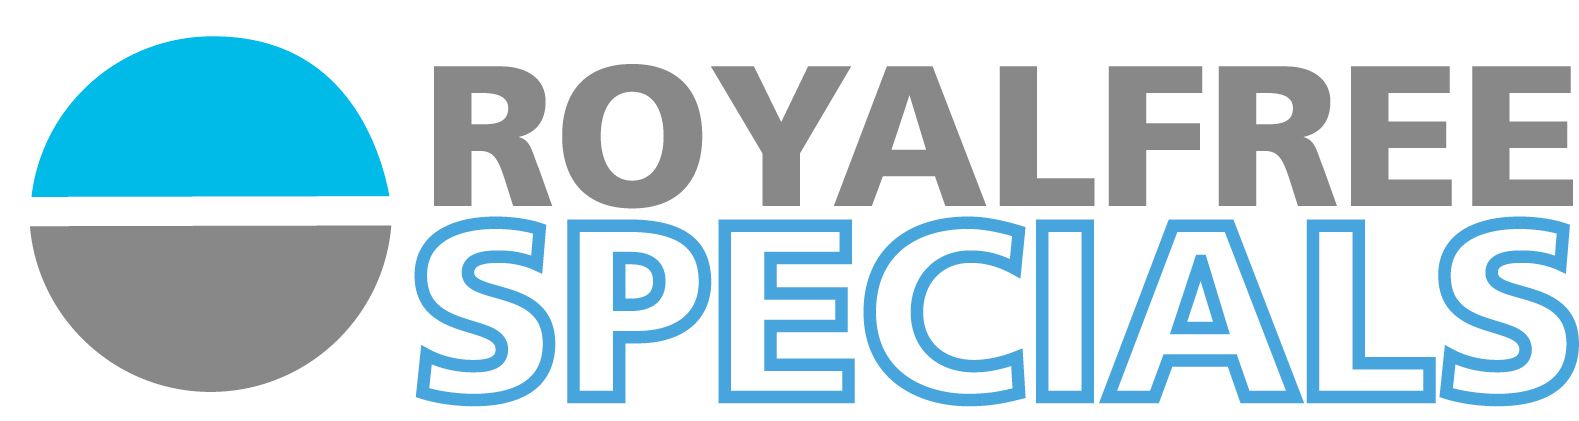 Royal Free Specials